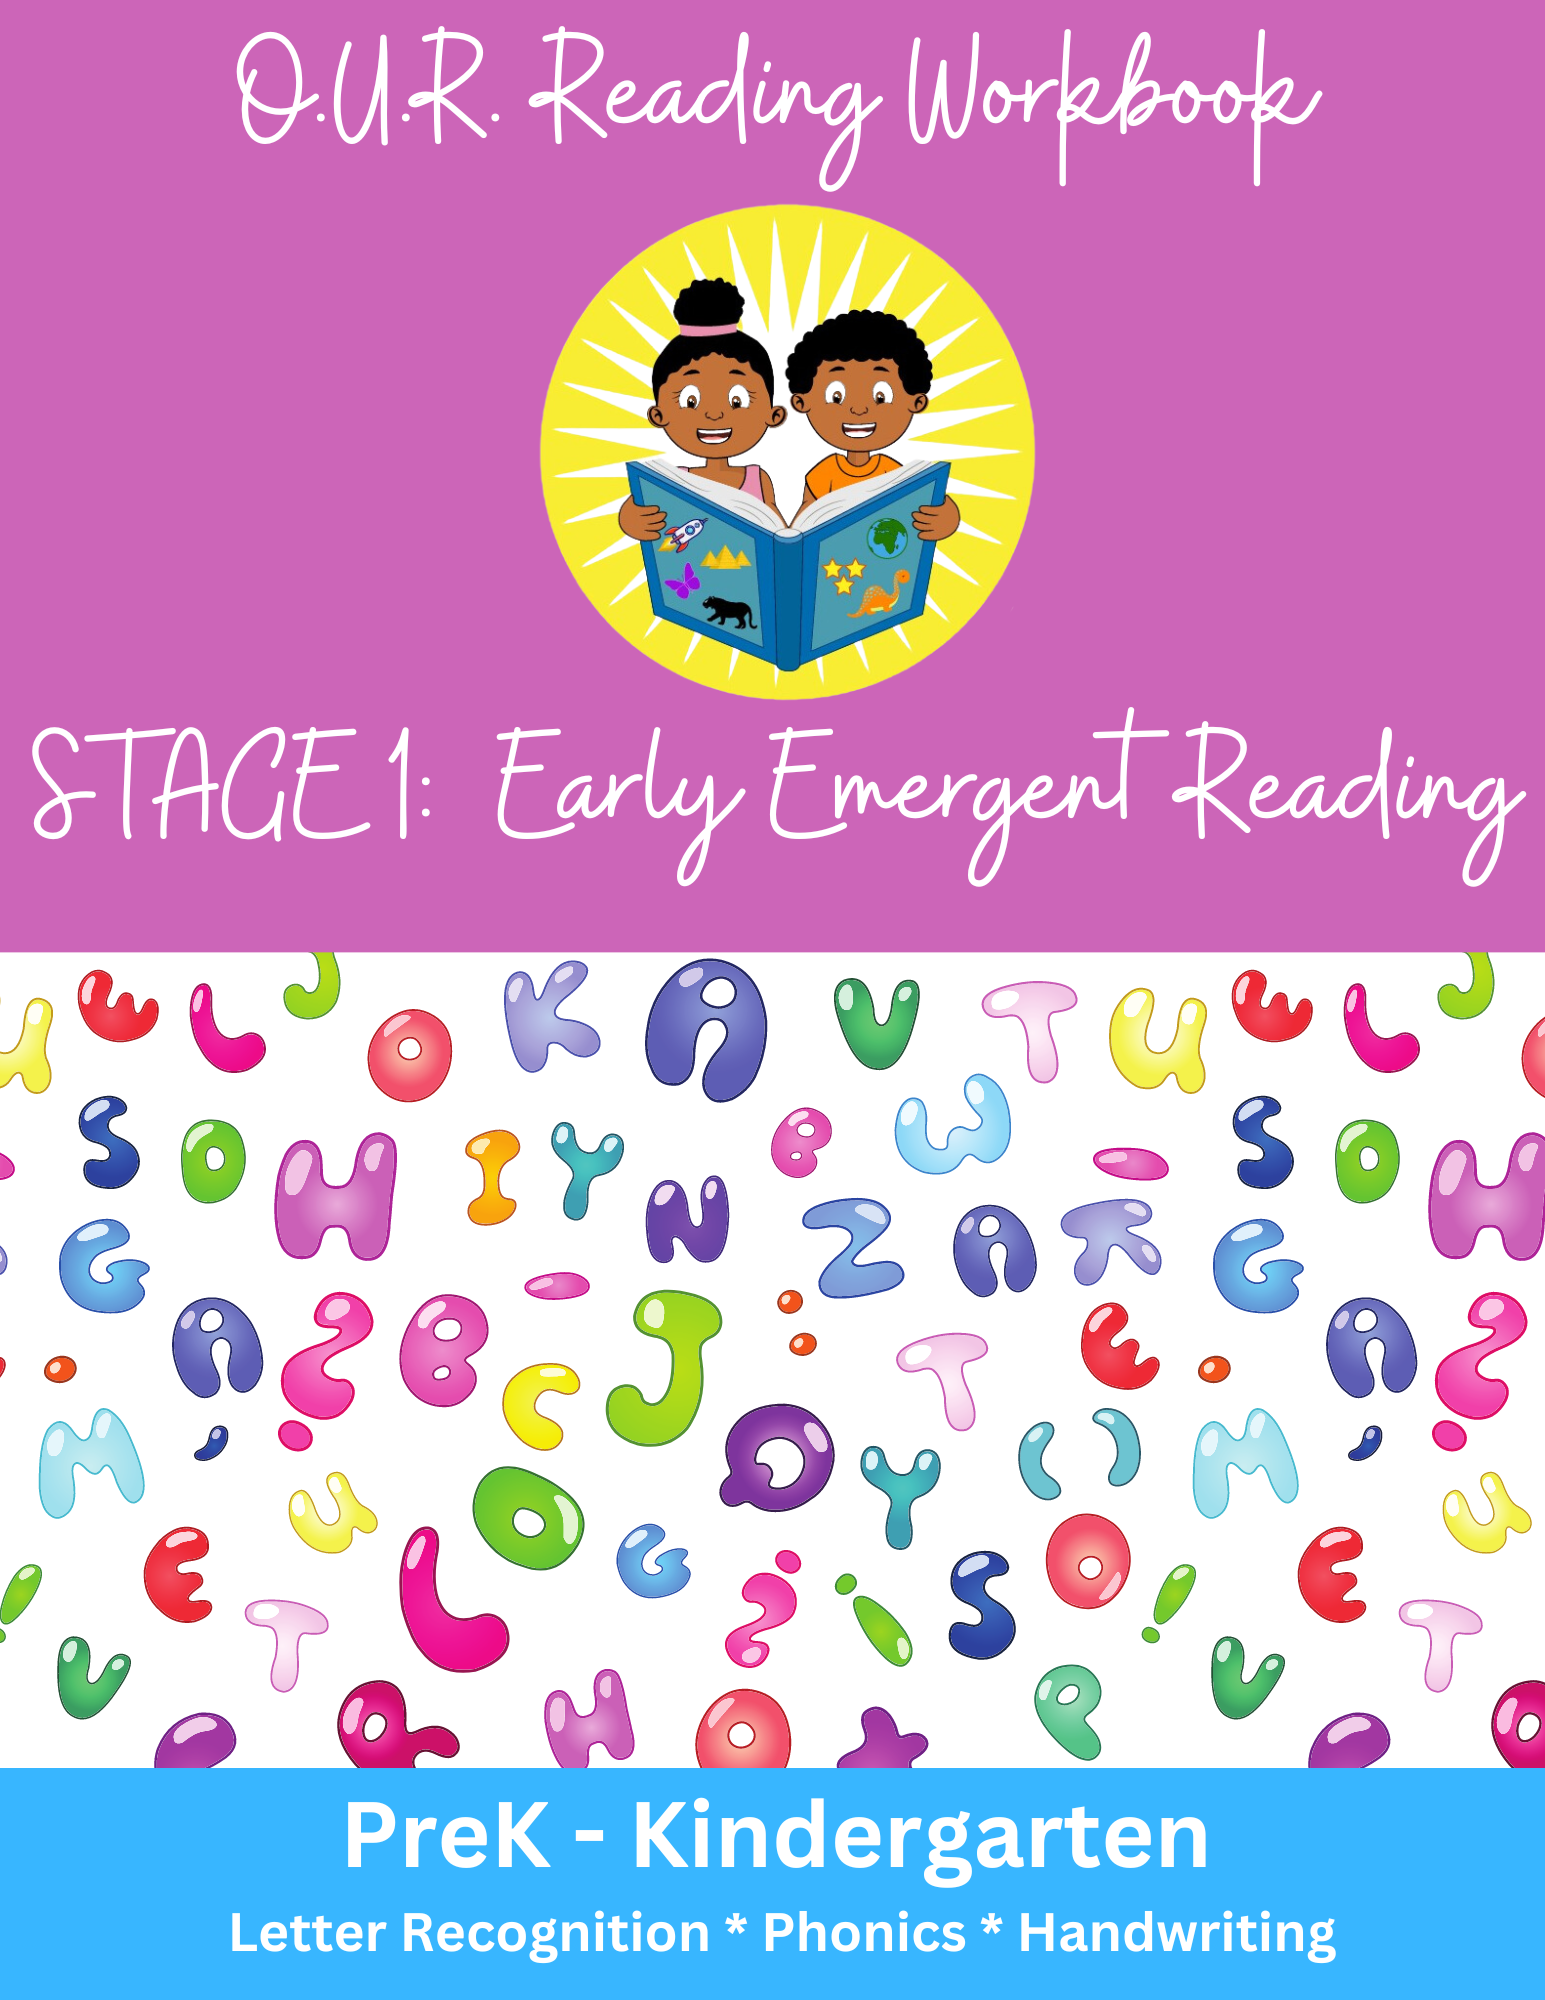 Stage 1 Reading Workbook (pdf)